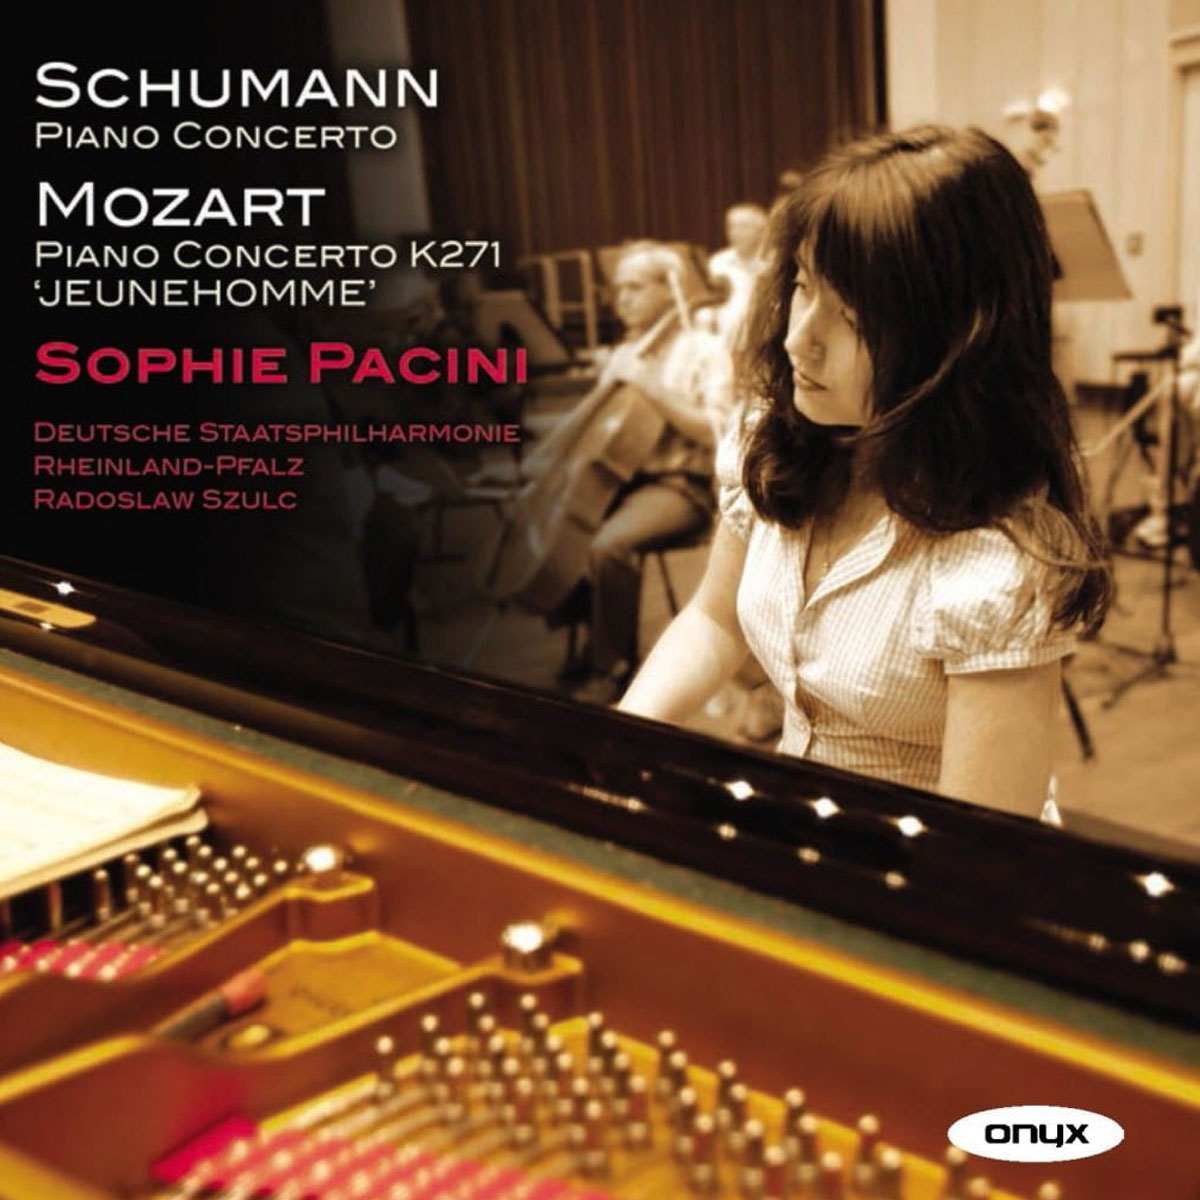 Albumcover Schumann Mozart